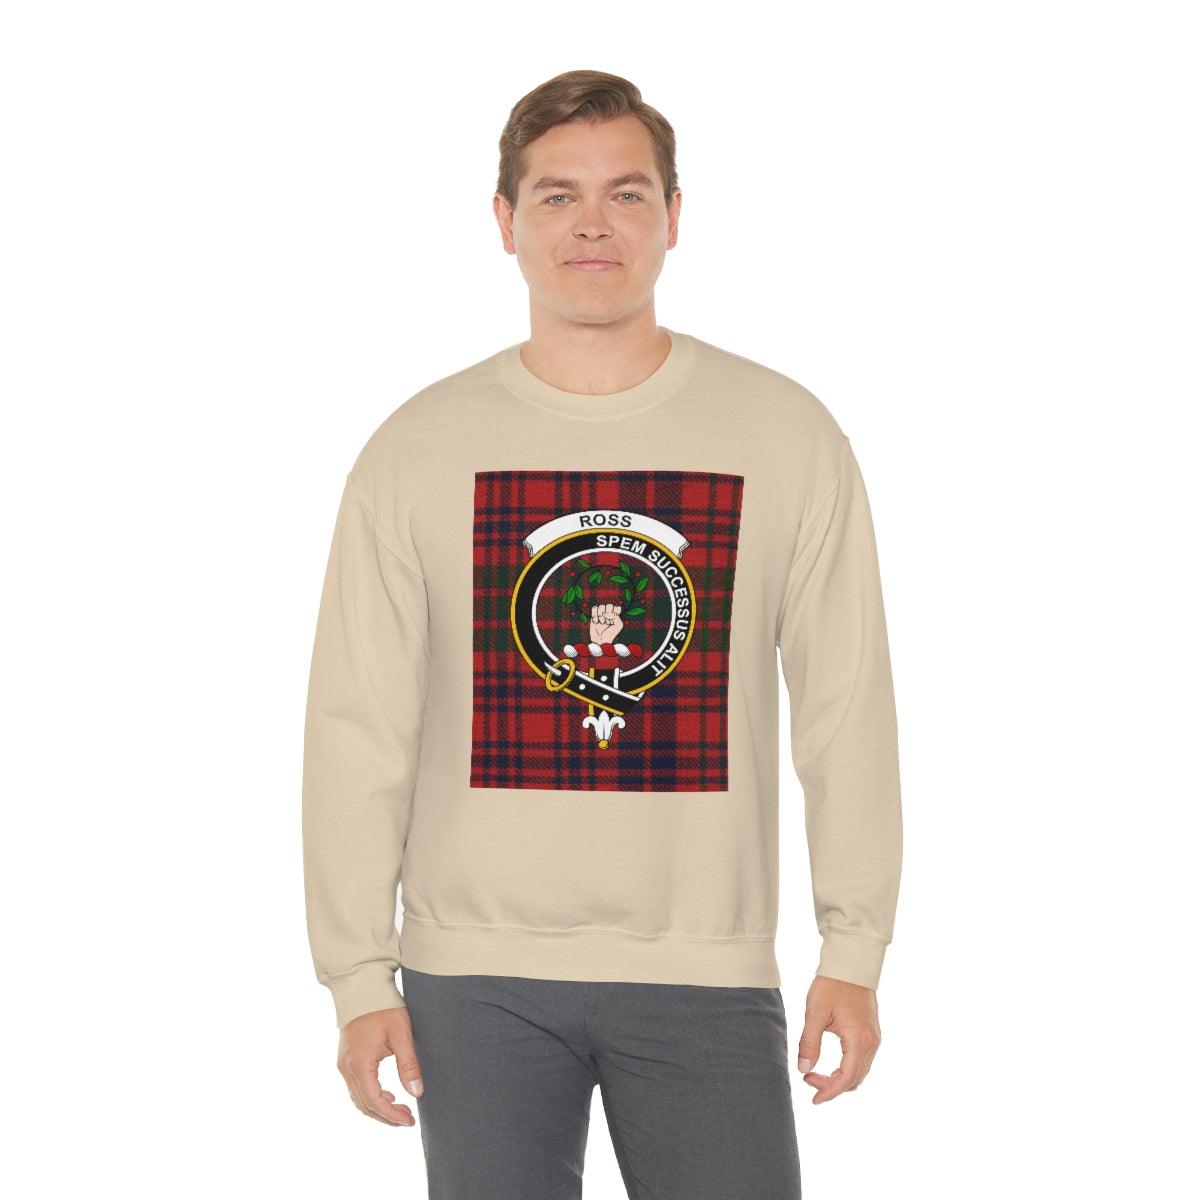 Clan Ross Scottish Tartan Sweatshirt, Ross Family Plaid Shirt, Ross Clan Crest Scotland Gift, Scottish Unisex Shirt